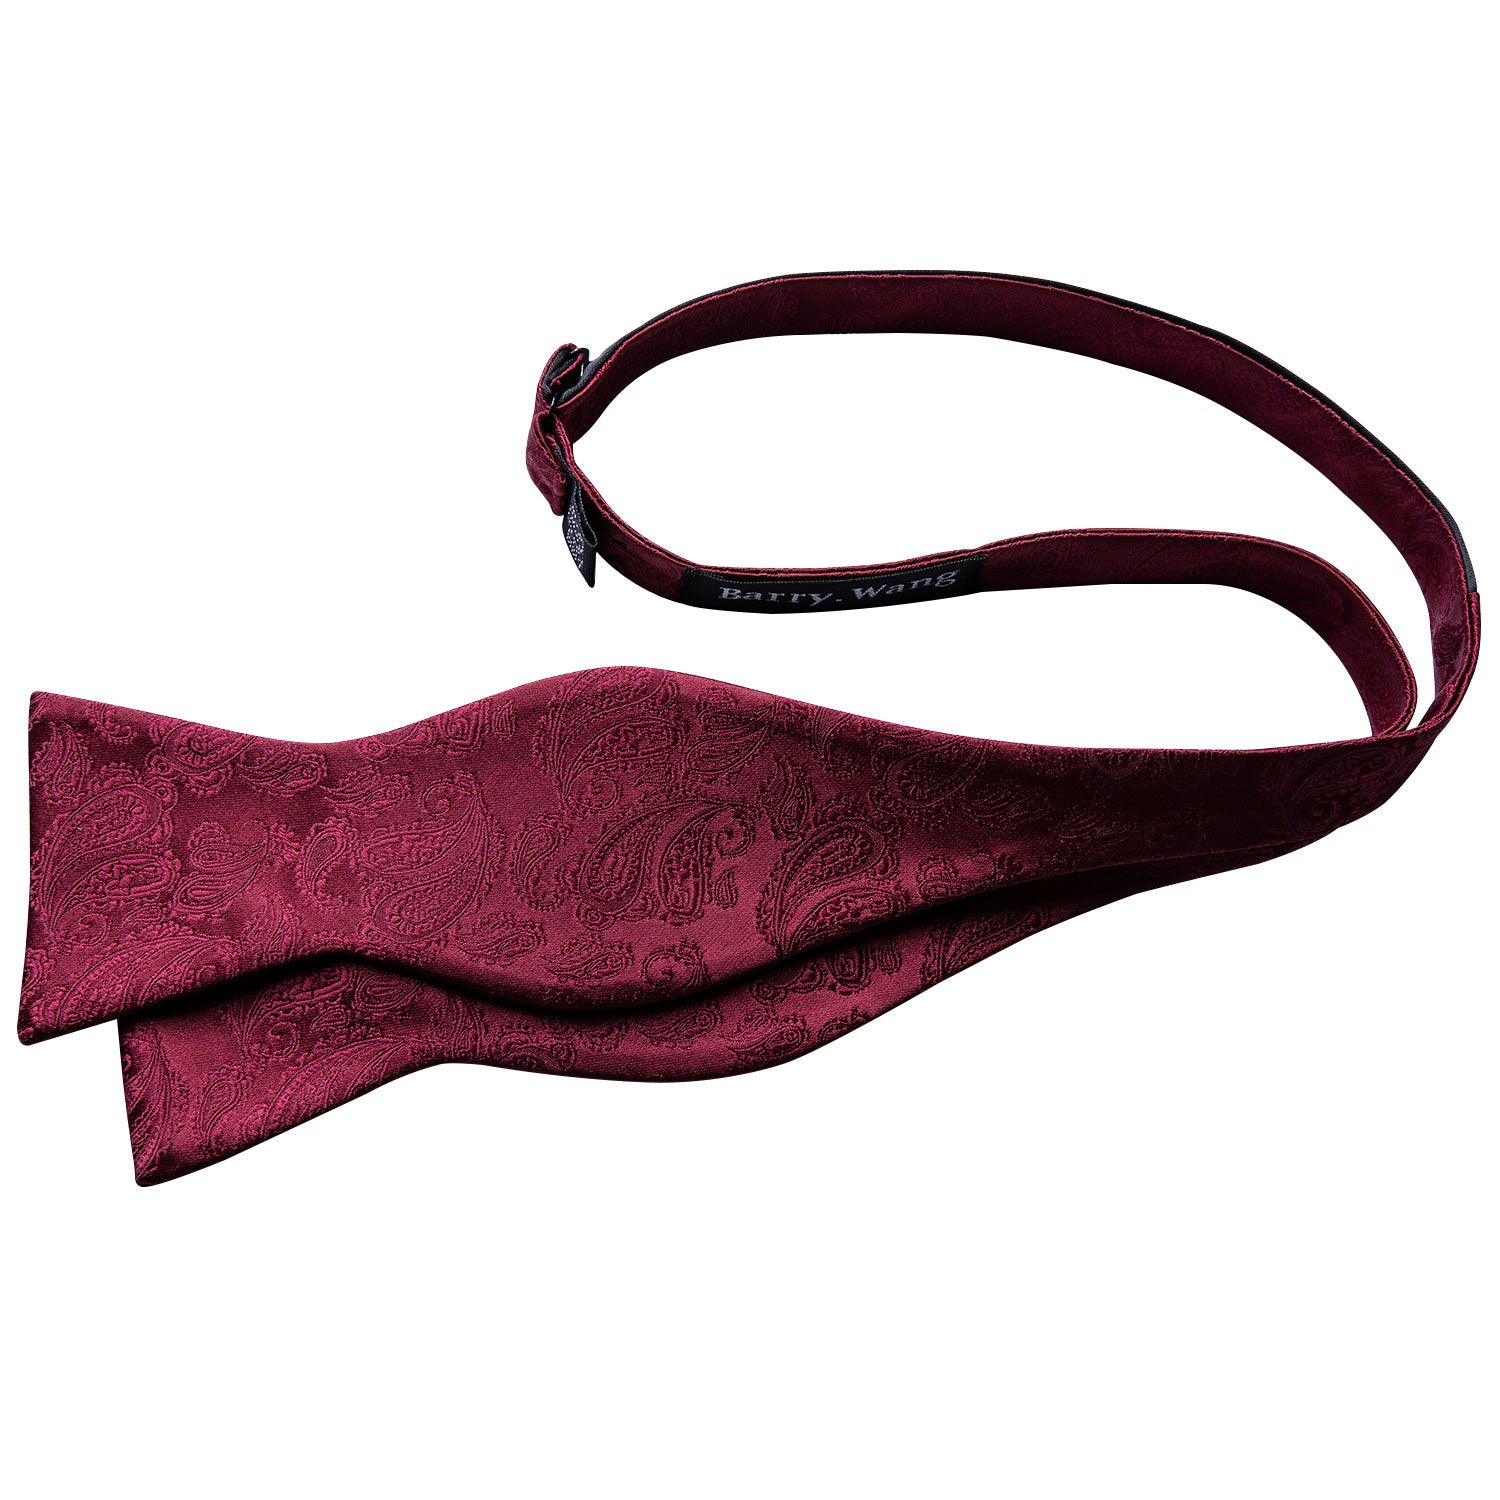 Barry.wang Red Tie Paisley Silk Self-Tie Bow Tie Hanky Cufflinks Set for Men Wedding